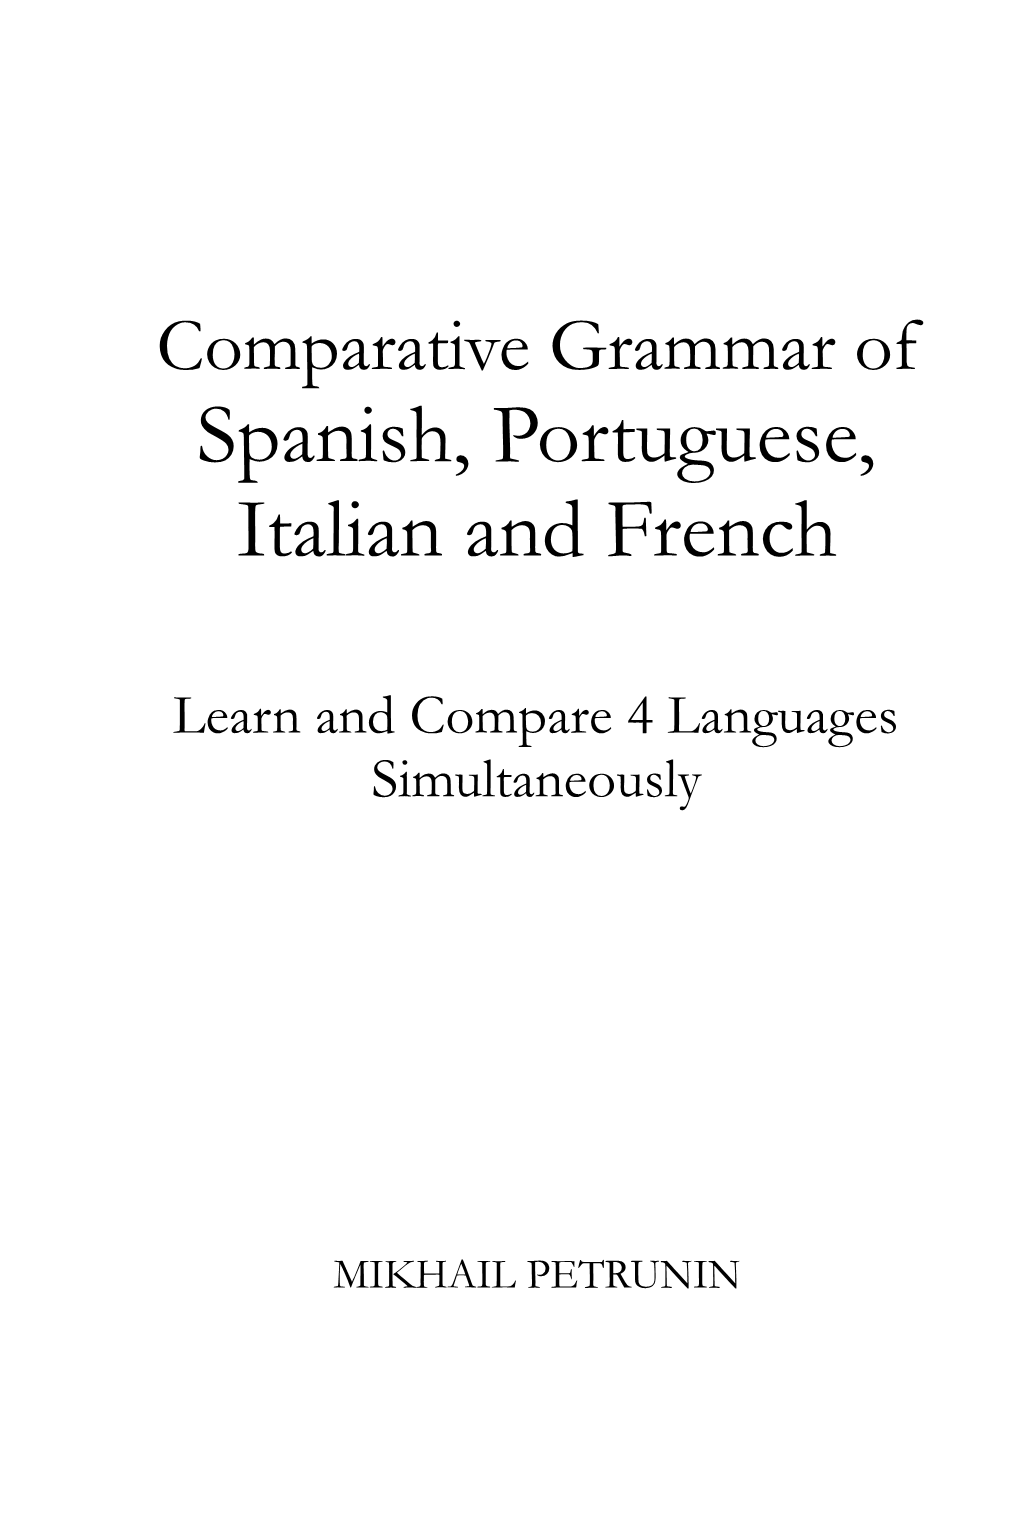 Paperback of Comparative Grammar of Spanish, Portuguese, Italian